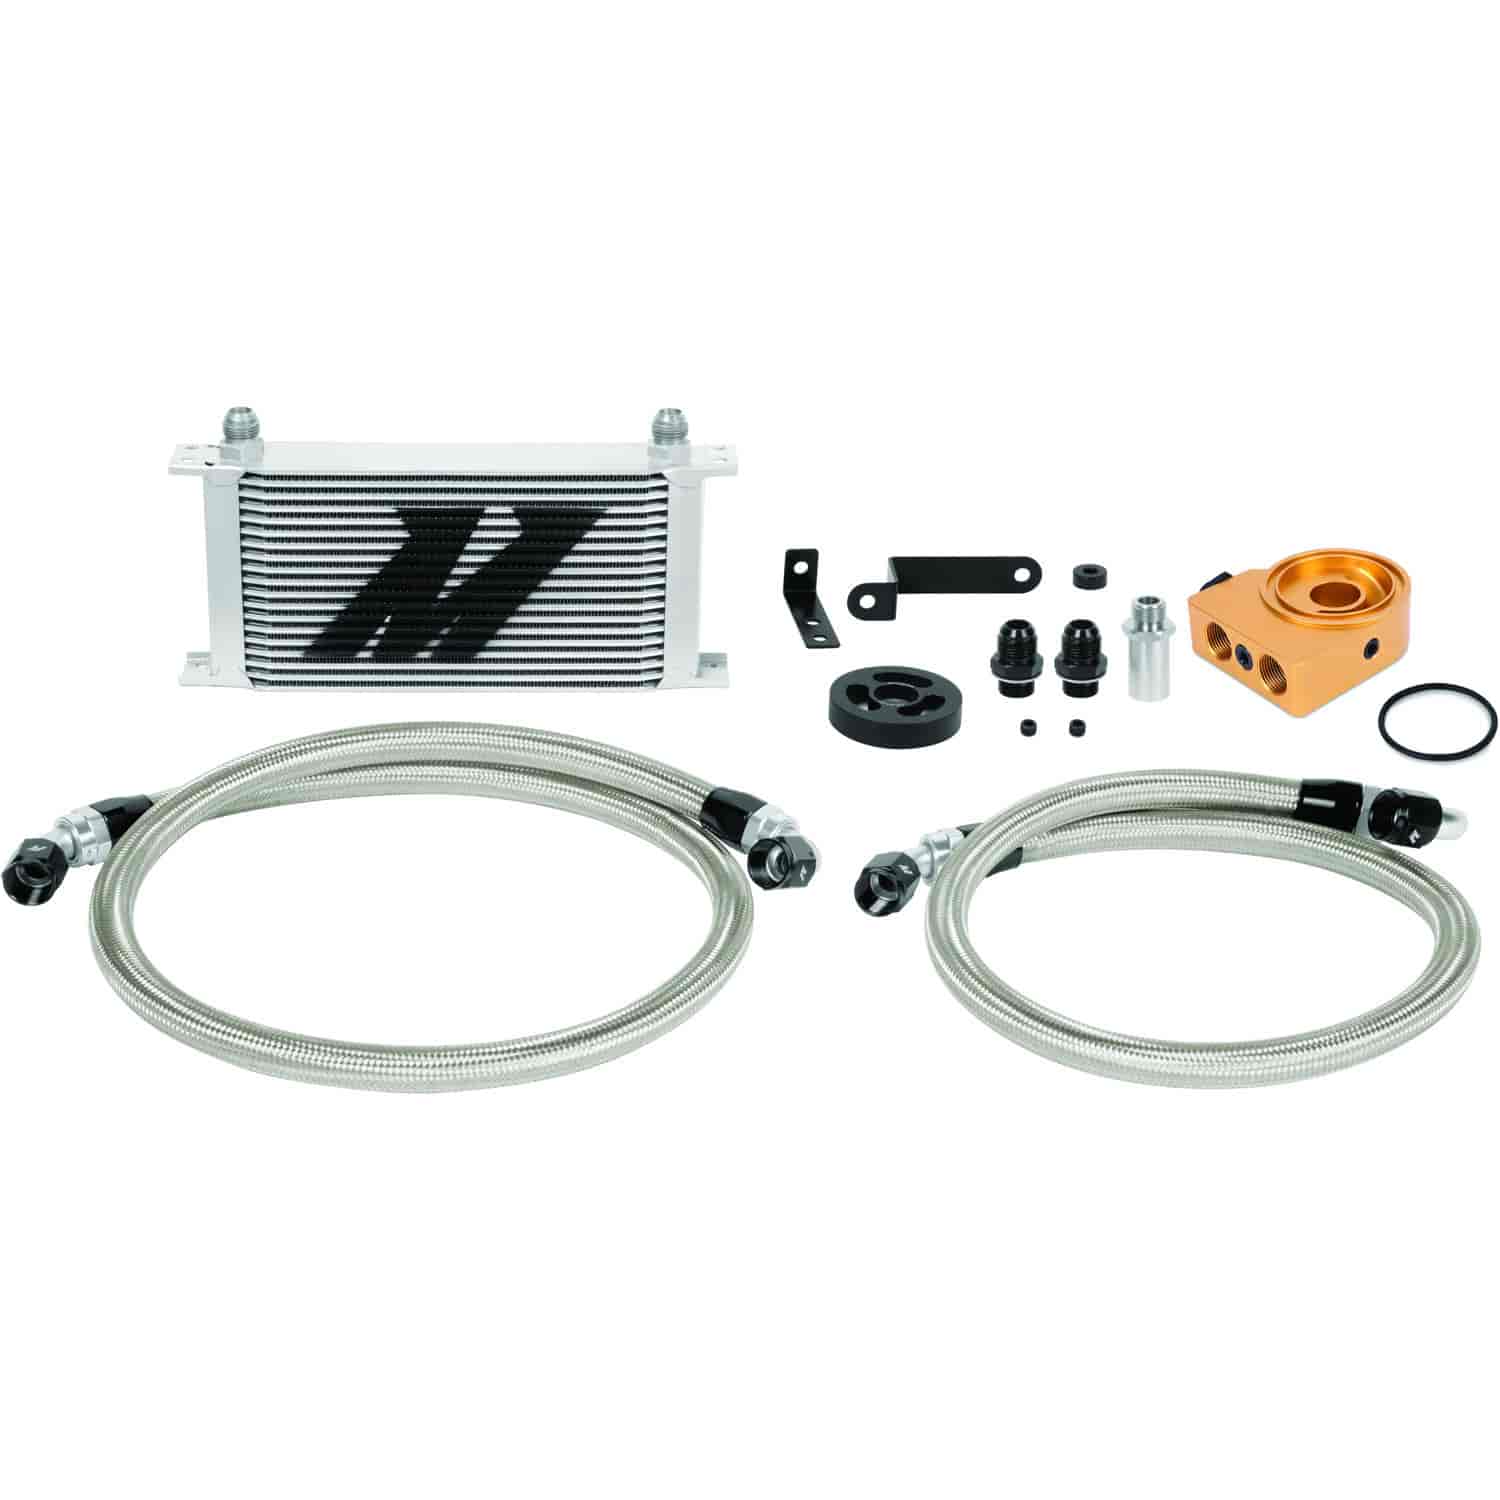 Subaru WRX Thermostatic Oil Cooler Kit - MFG Part No. MMOC-WRX-08T